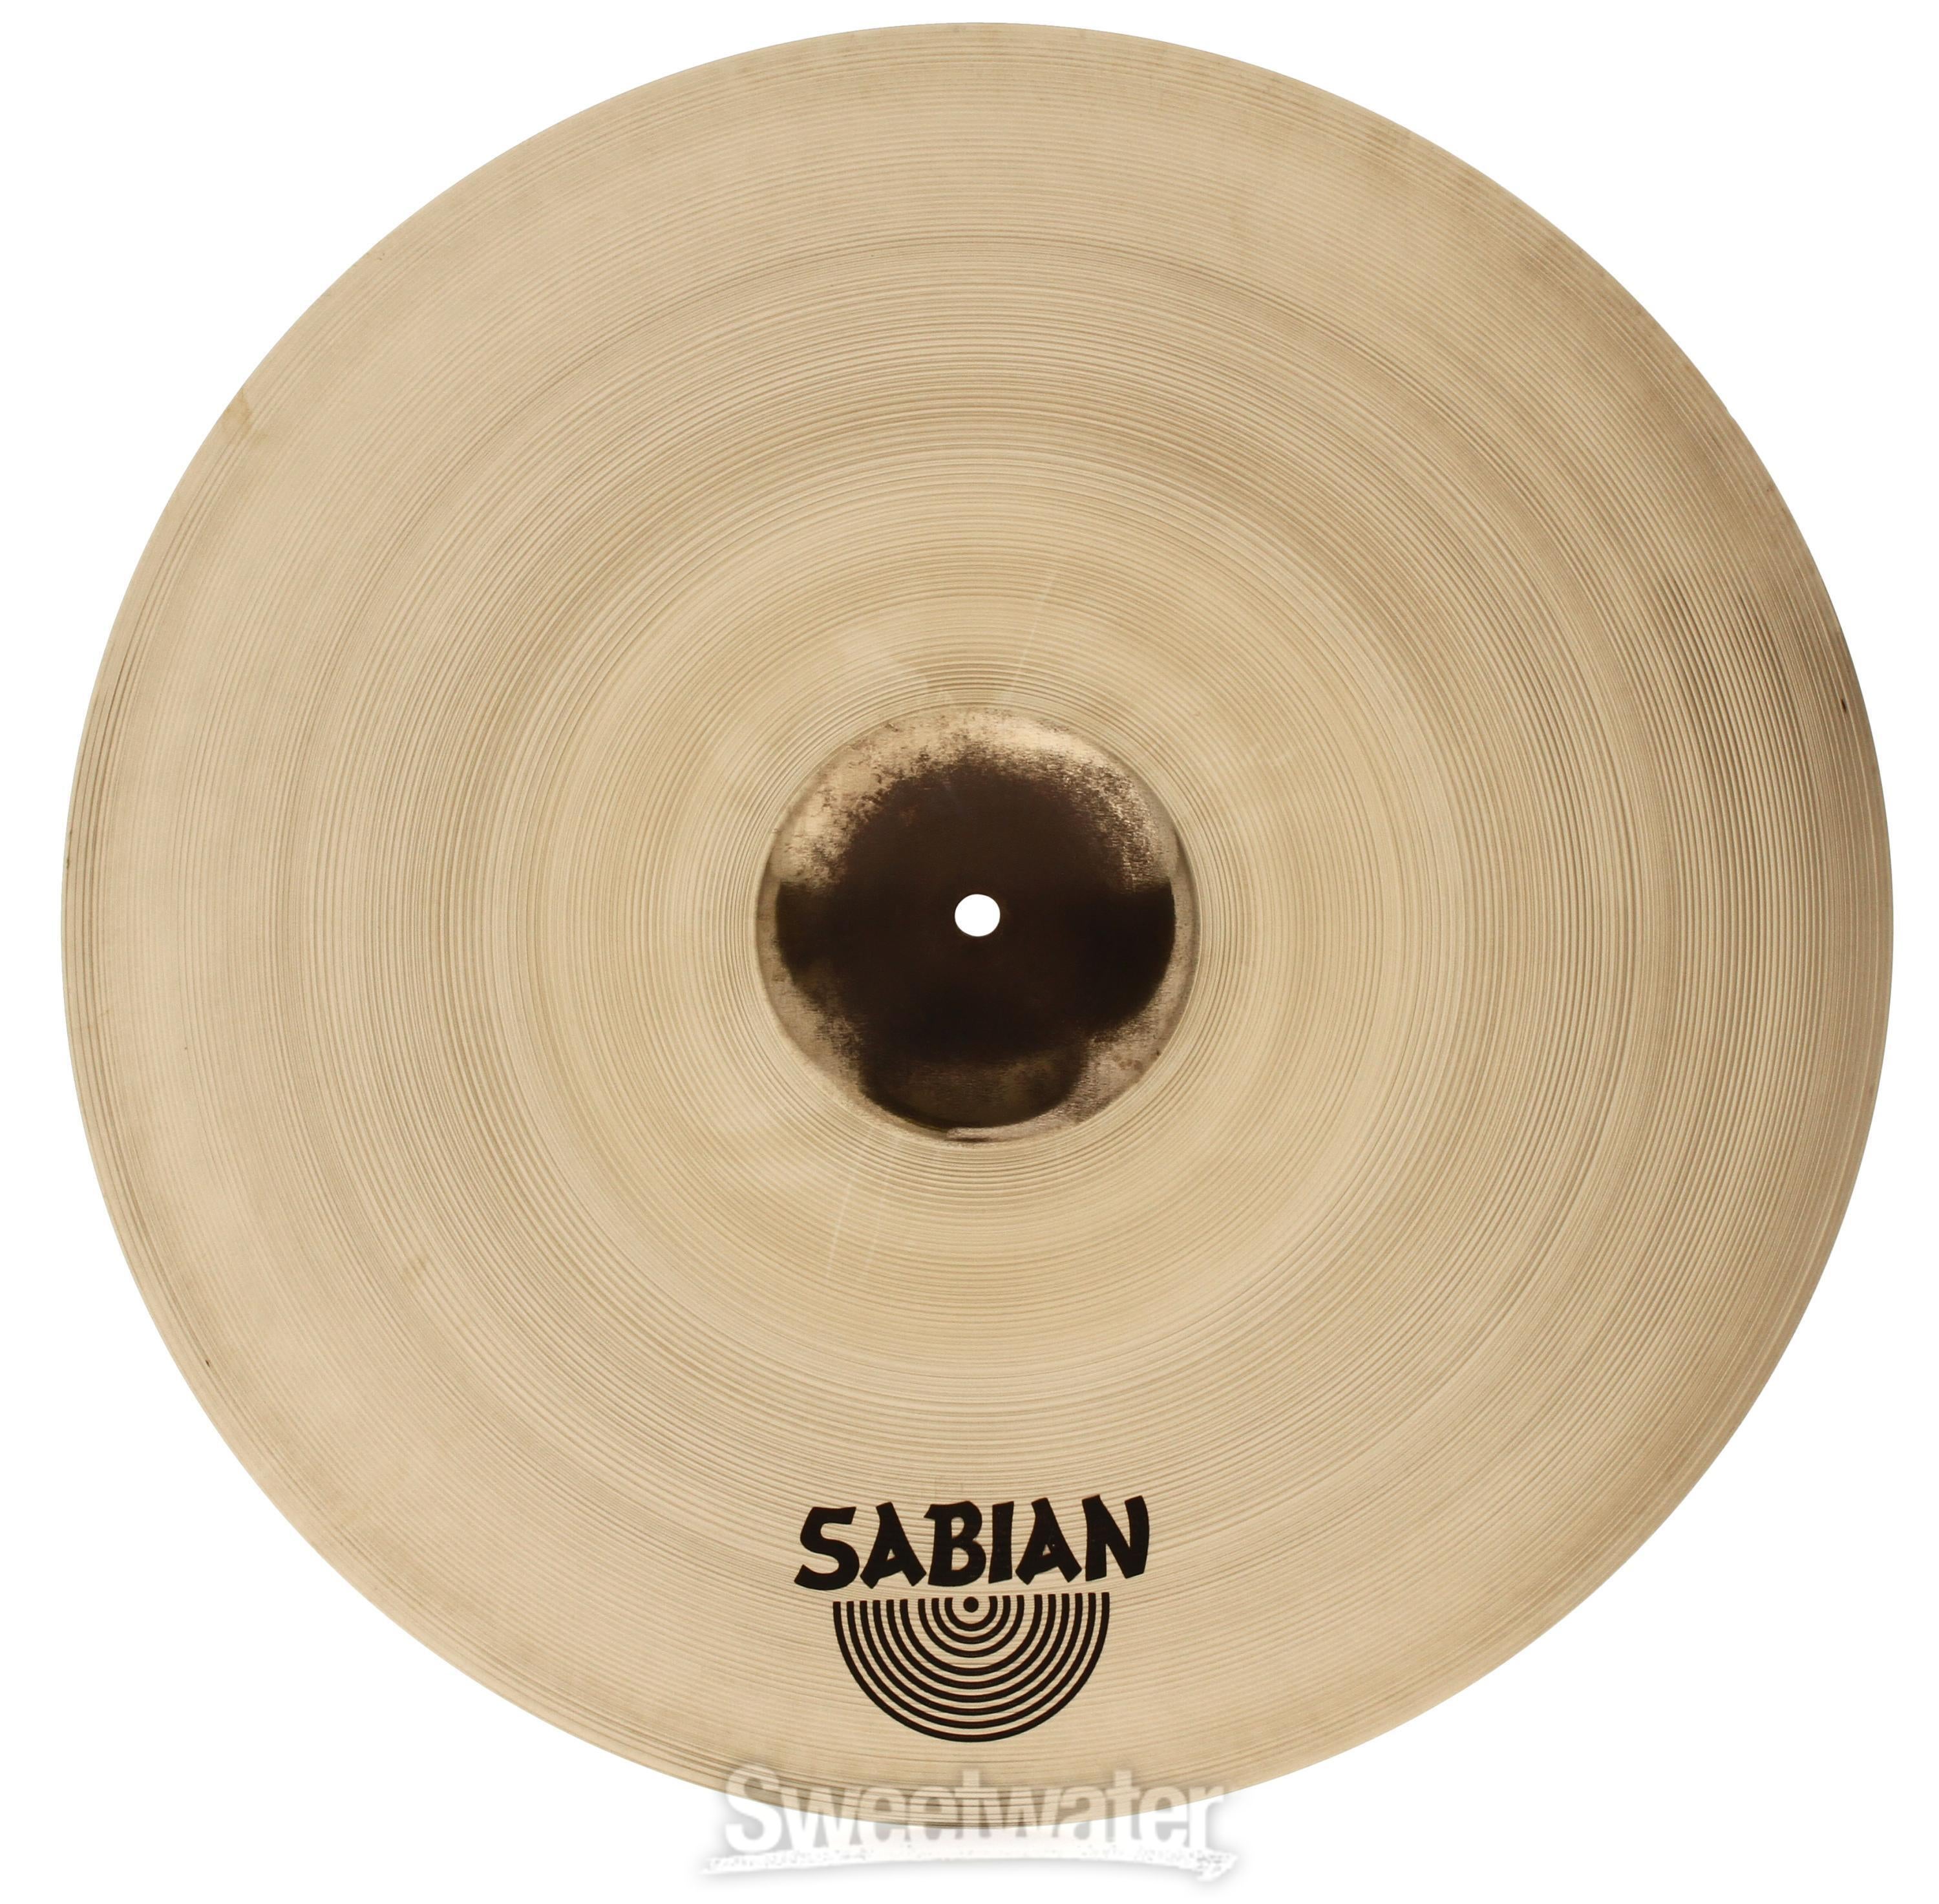 Sabian 21 inch AAX Raw Bell Dry Ride Cymbal - Brilliant Finish